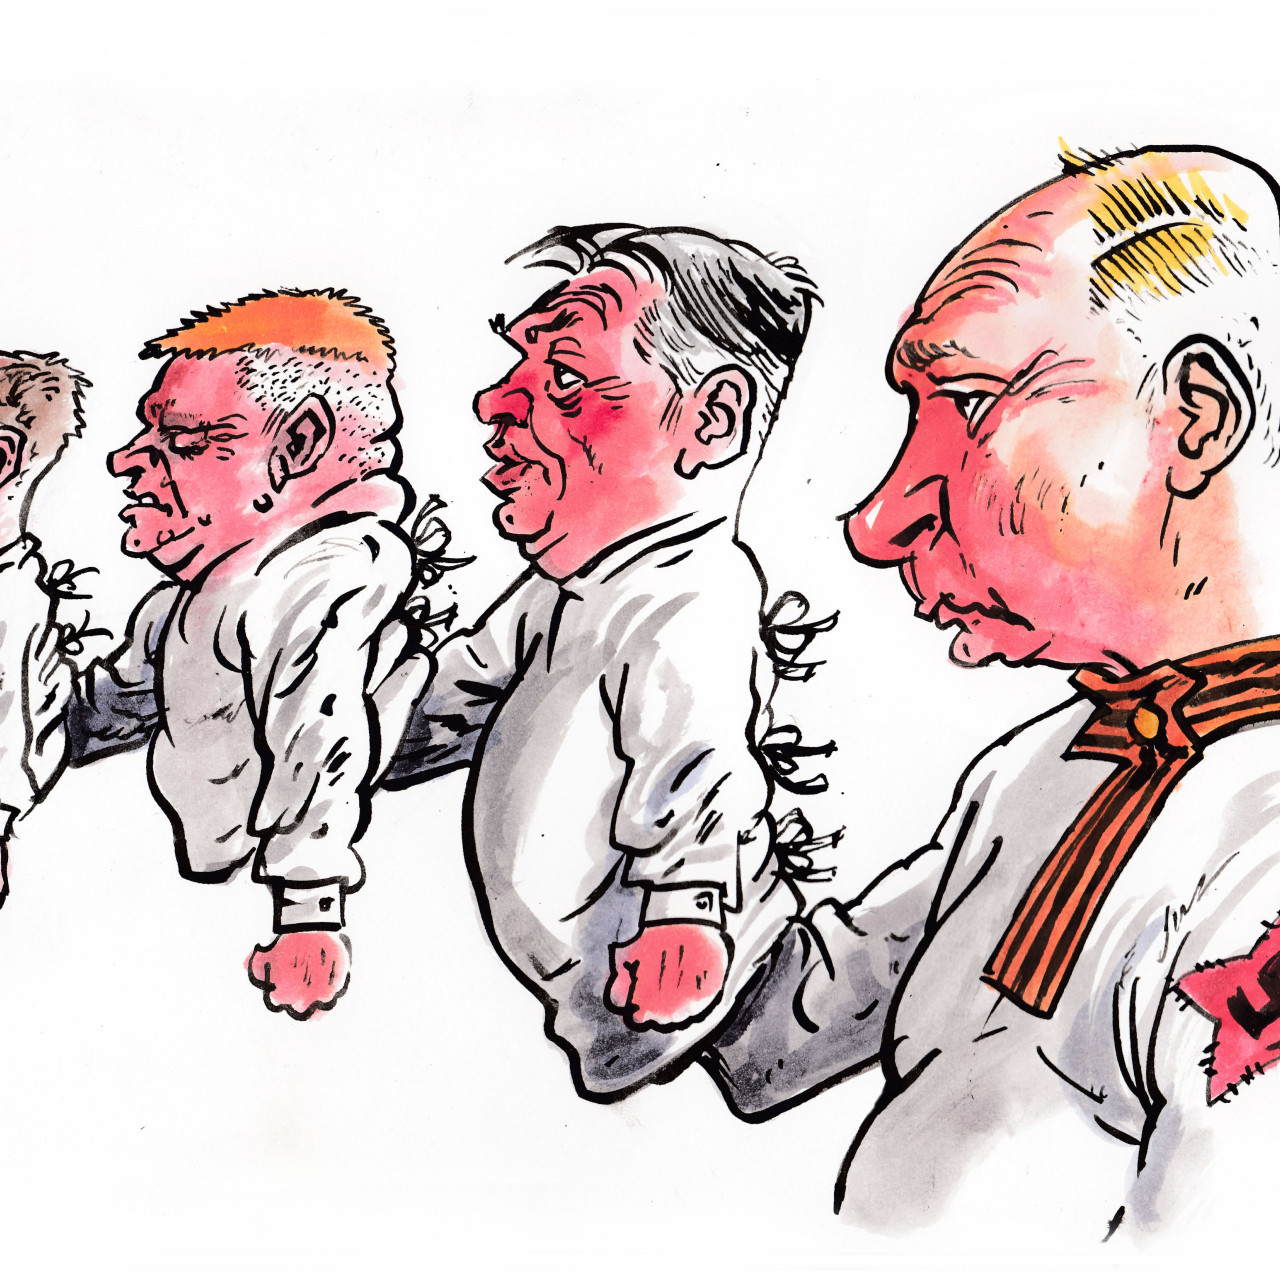 Danglár: Putinove bábky (11.2.2023)